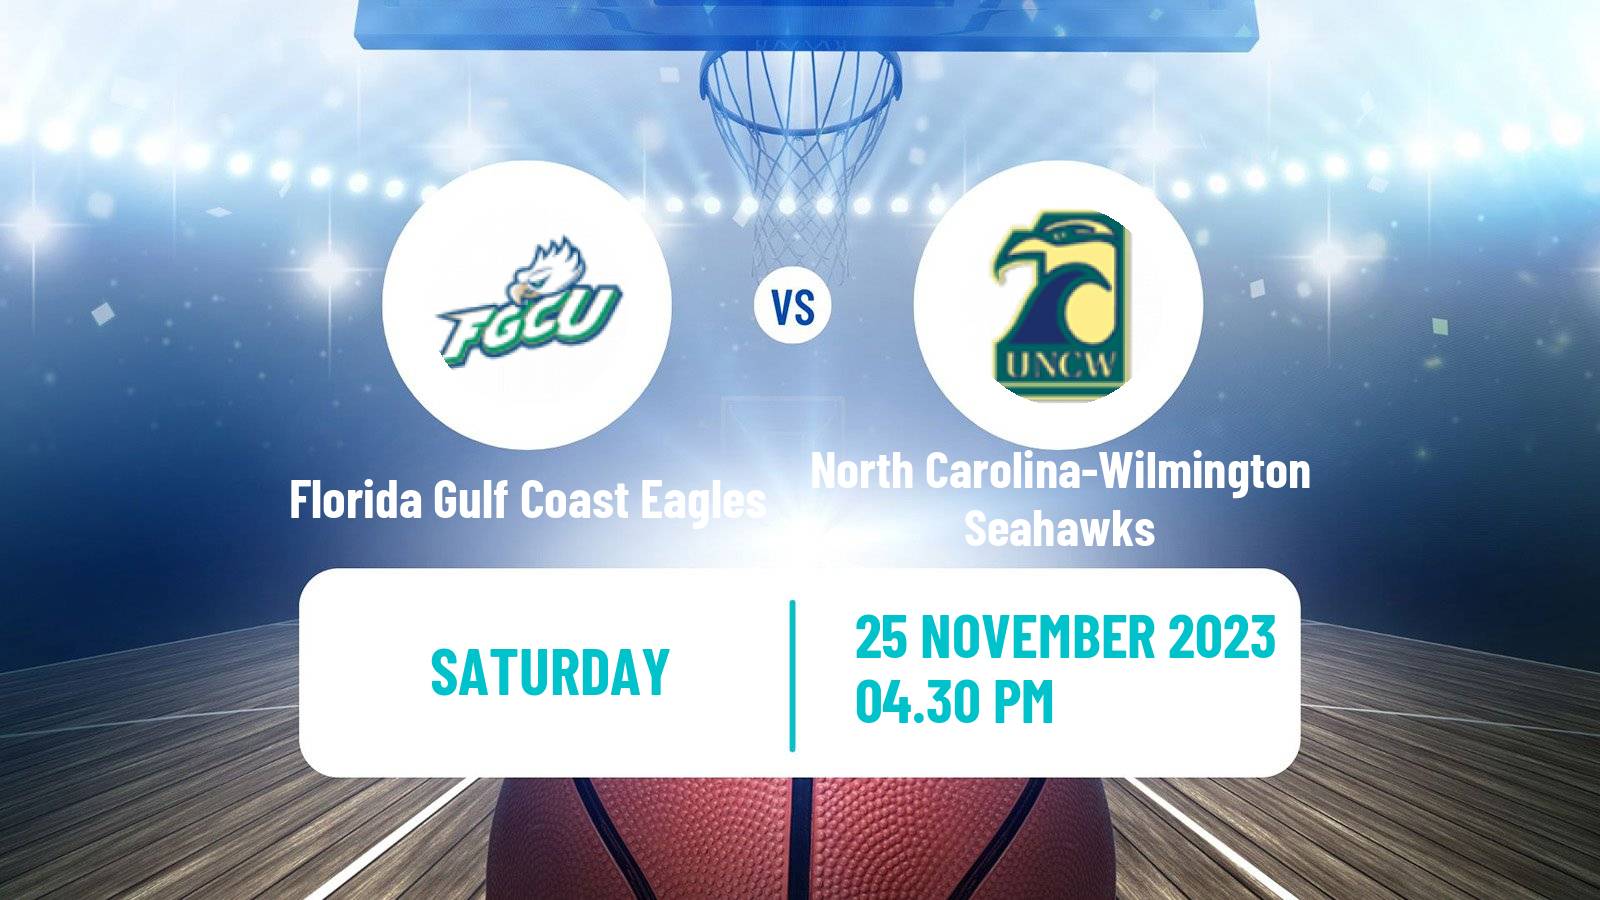 Basketball NCAA College Basketball Florida Gulf Coast Eagles - North Carolina-Wilmington Seahawks